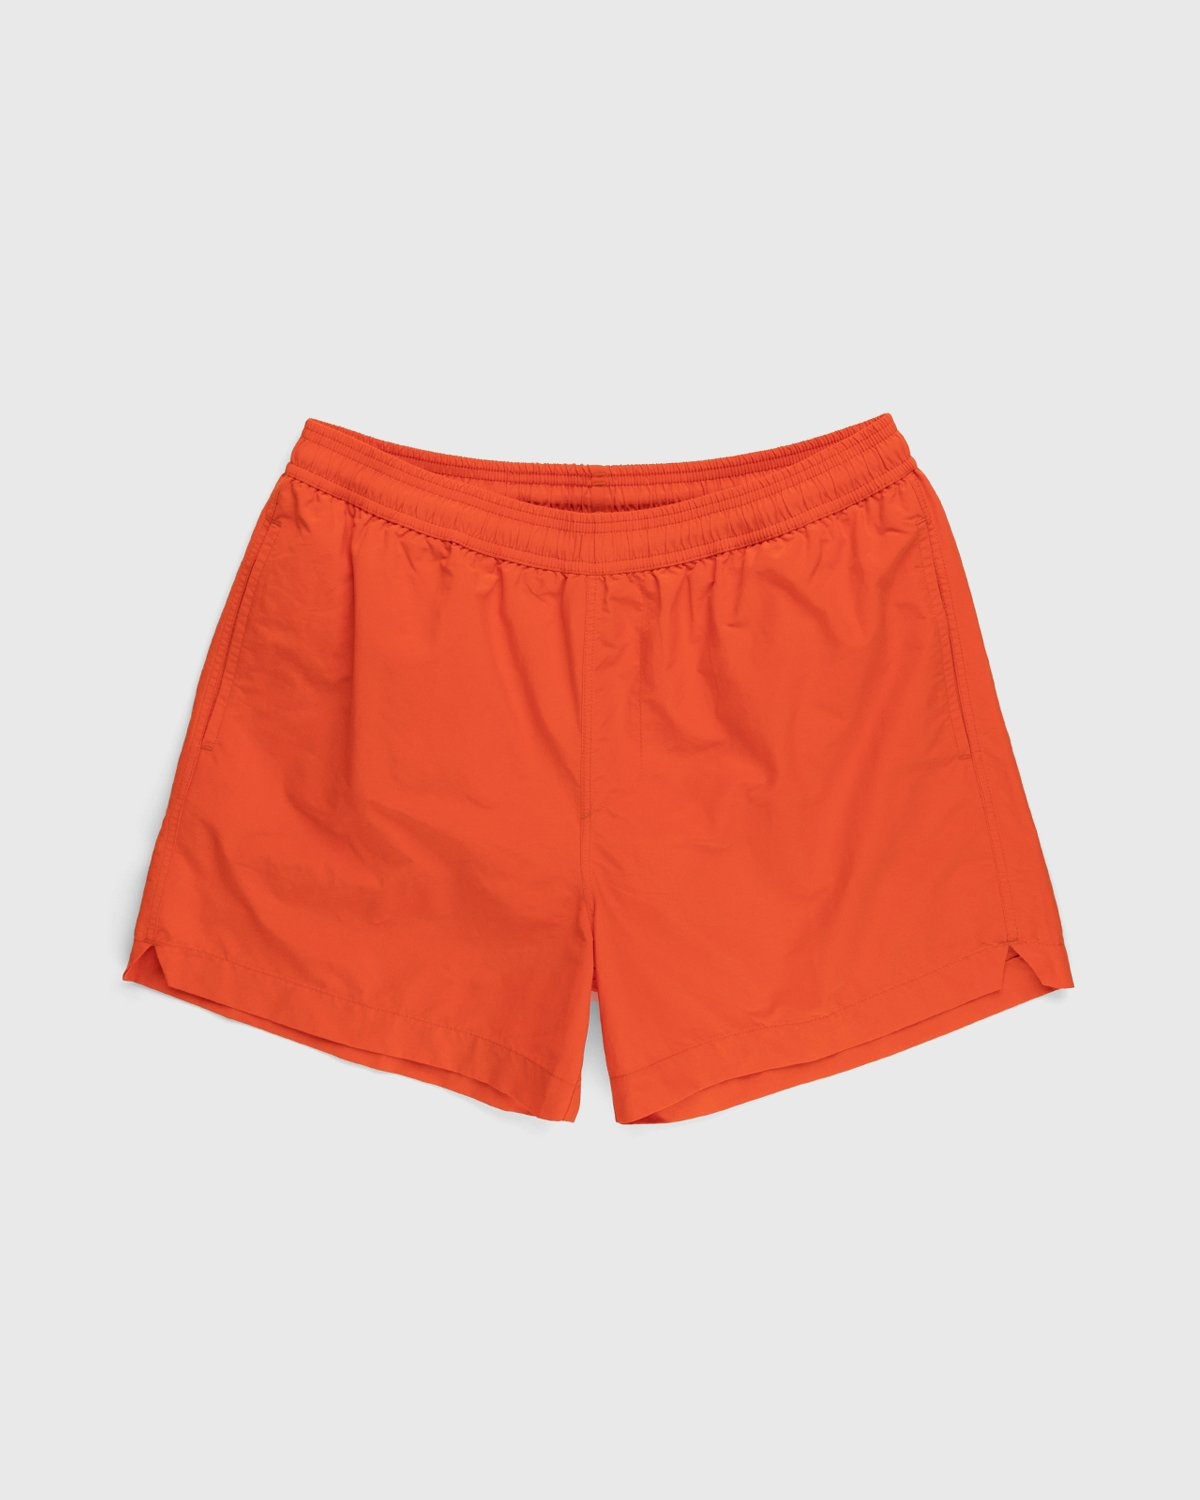 A-Cold-Wall* – Natant Nylon Short Rich Orange - Active Shorts - Orange - Image 1